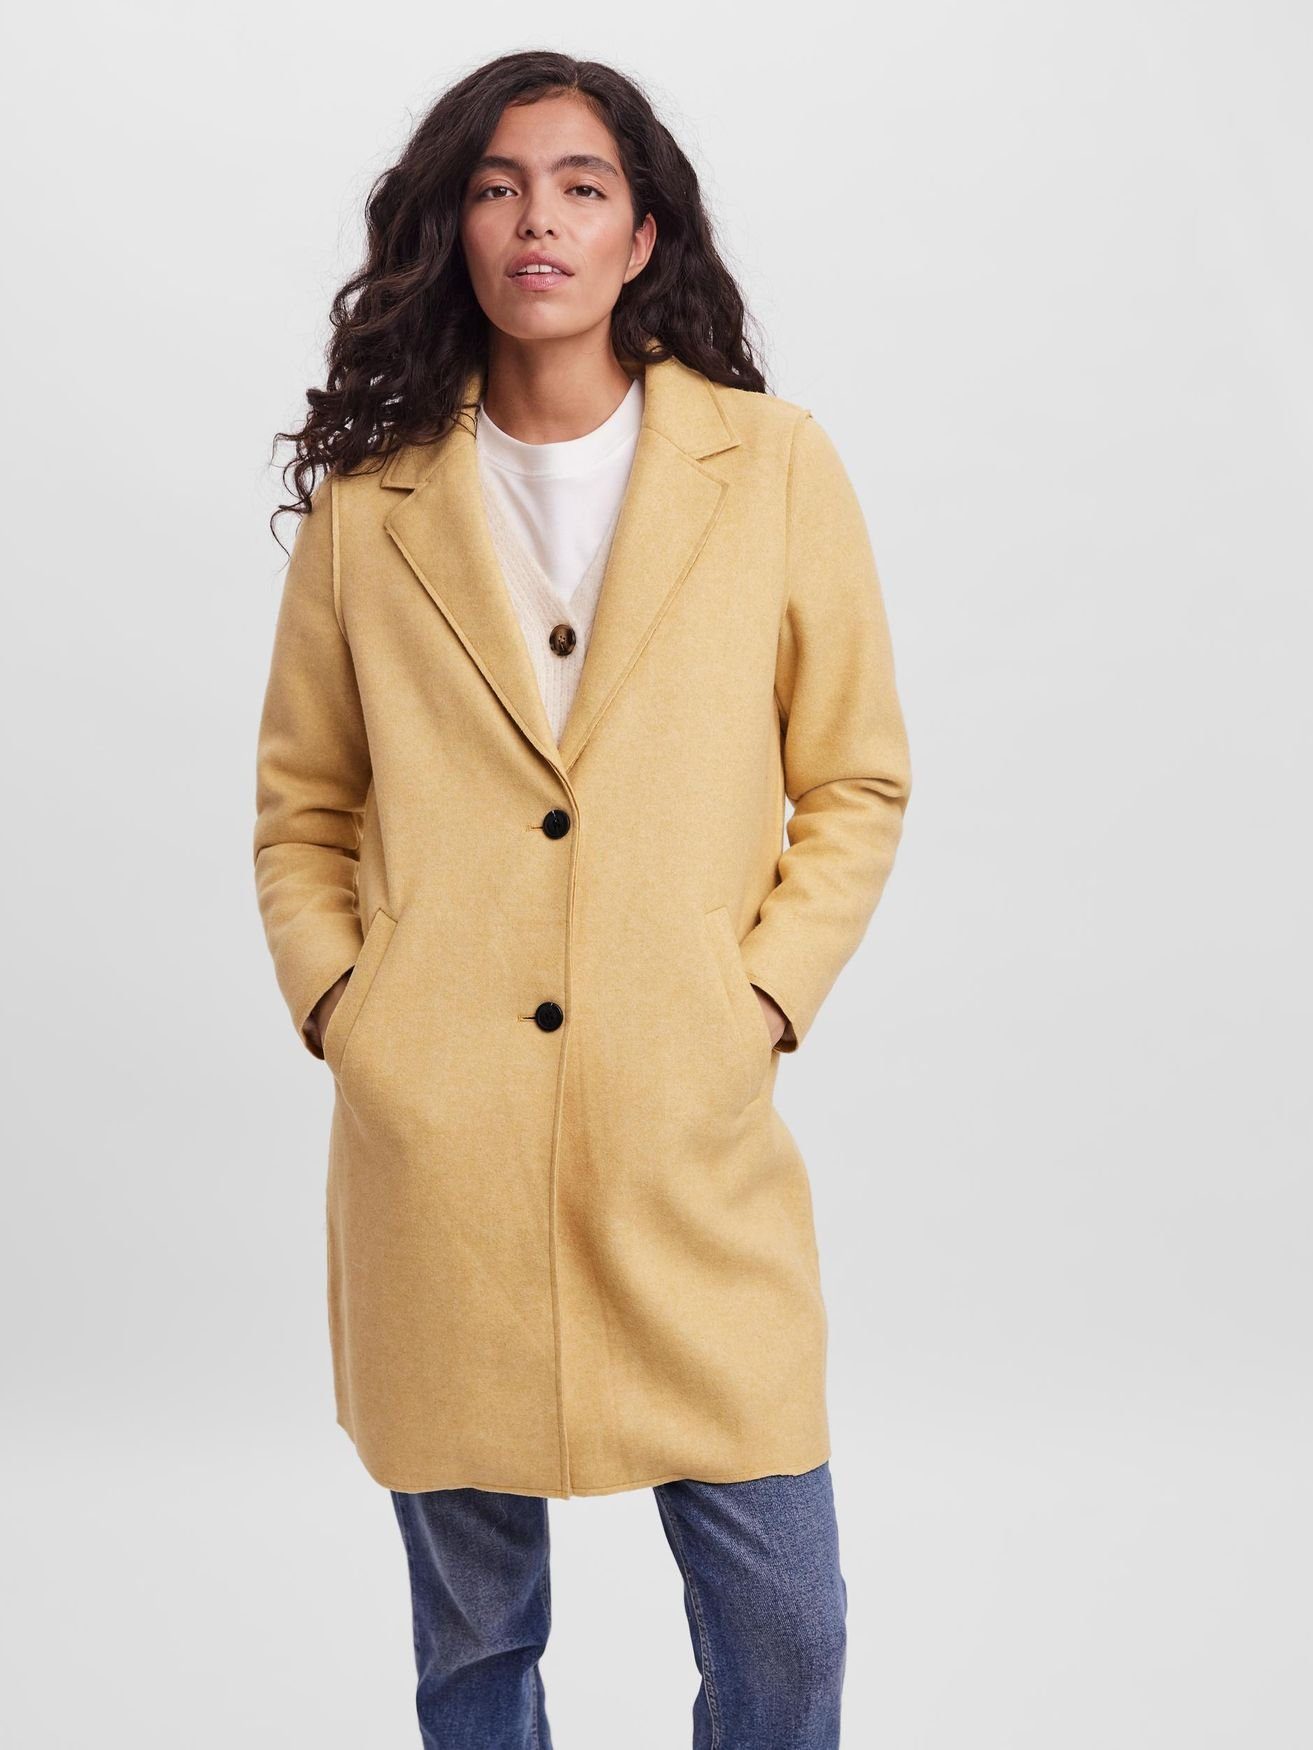 Moda Braun Mantel Coat Kapuze in Vero ohne Kurz Kurzmantel Jacke 4823 VMPAULA